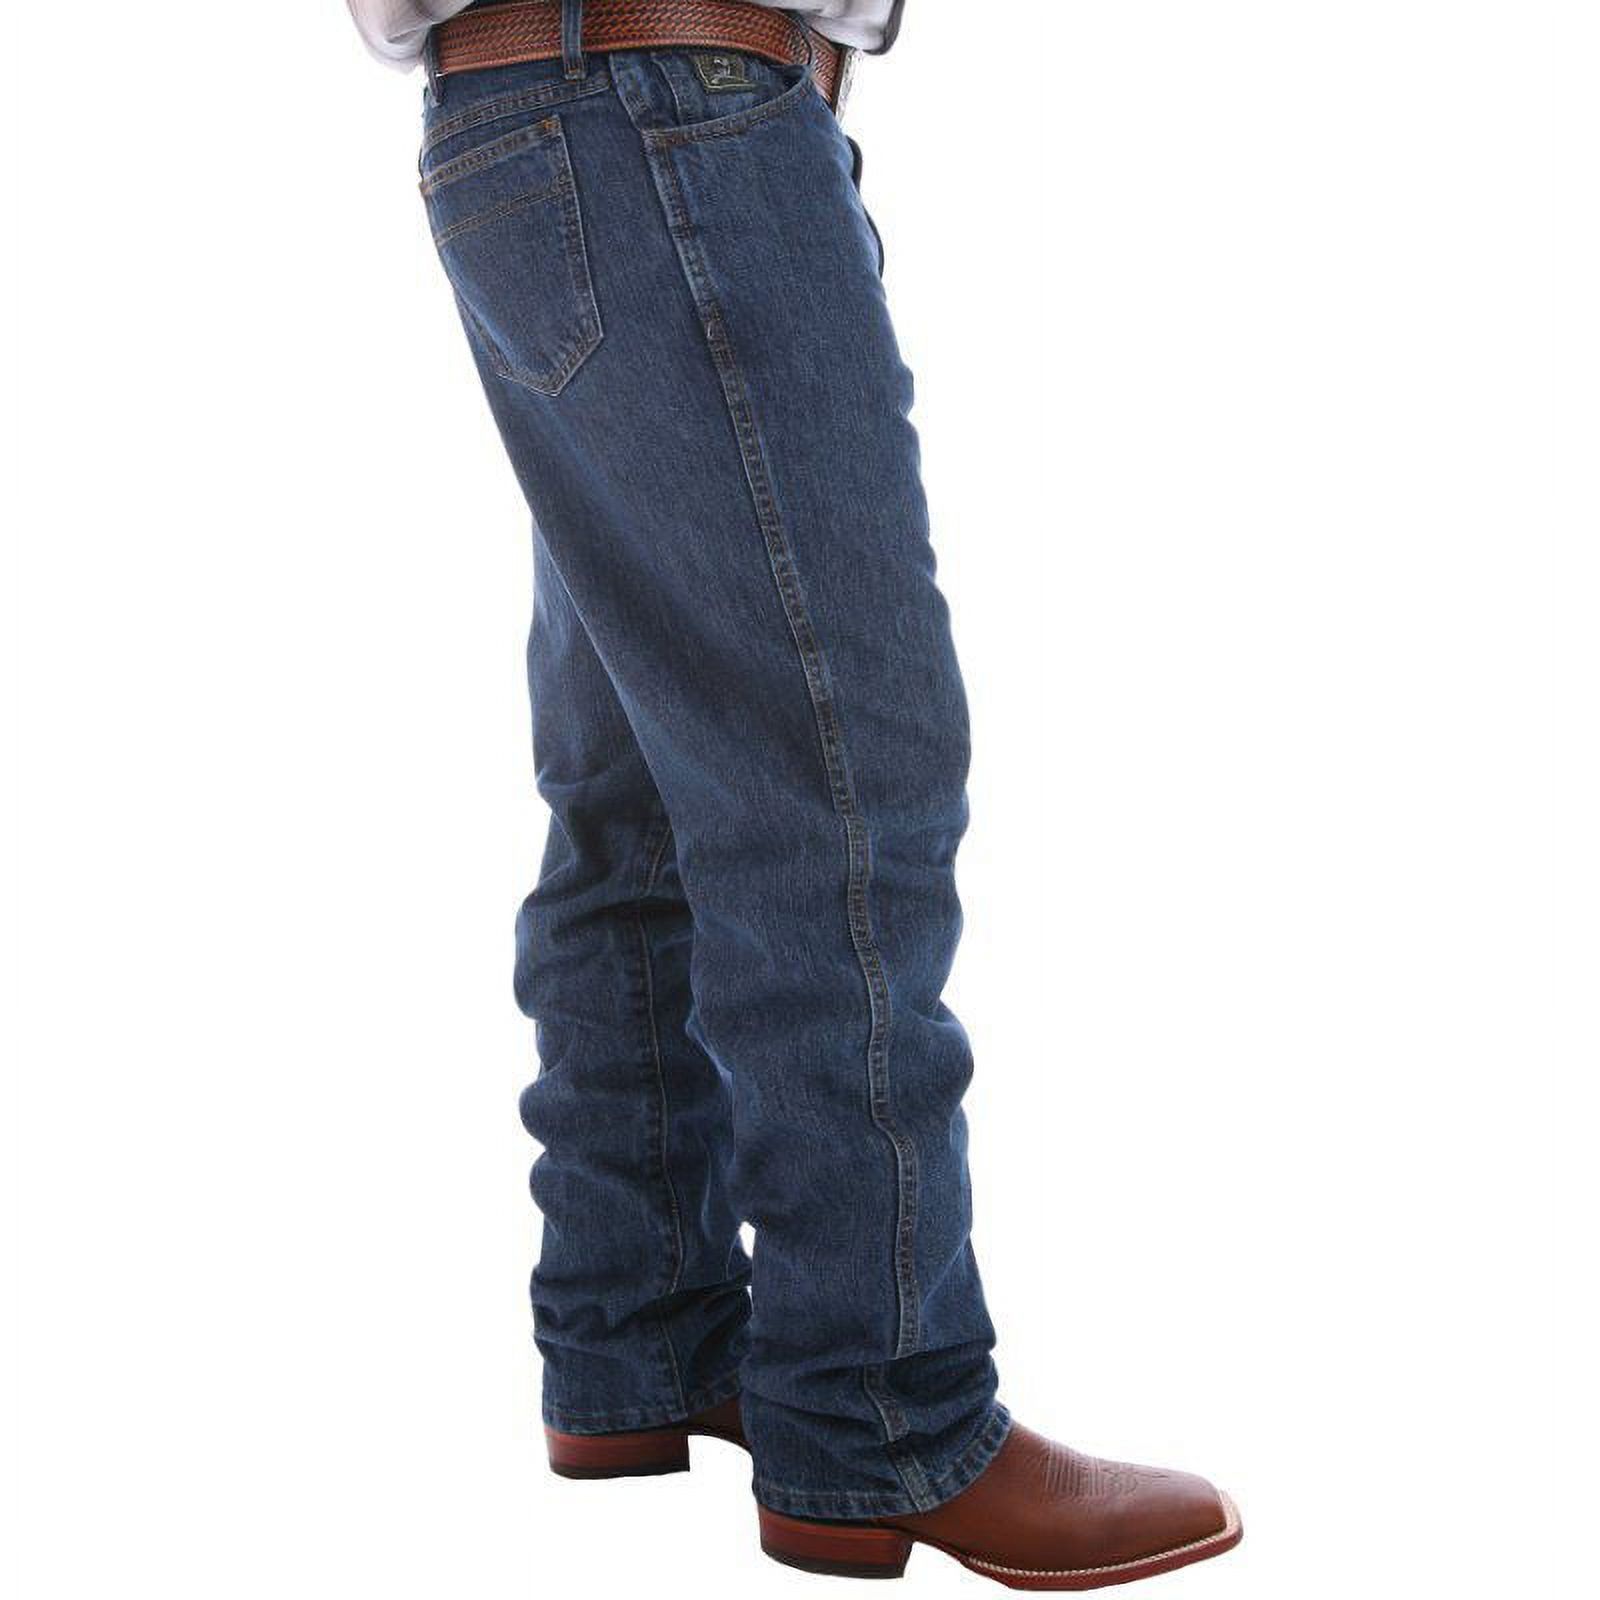 Cinch Apparel Mens Green Label Original Fit Jeans 40x36 Dark Stonewash - image 2 of 4